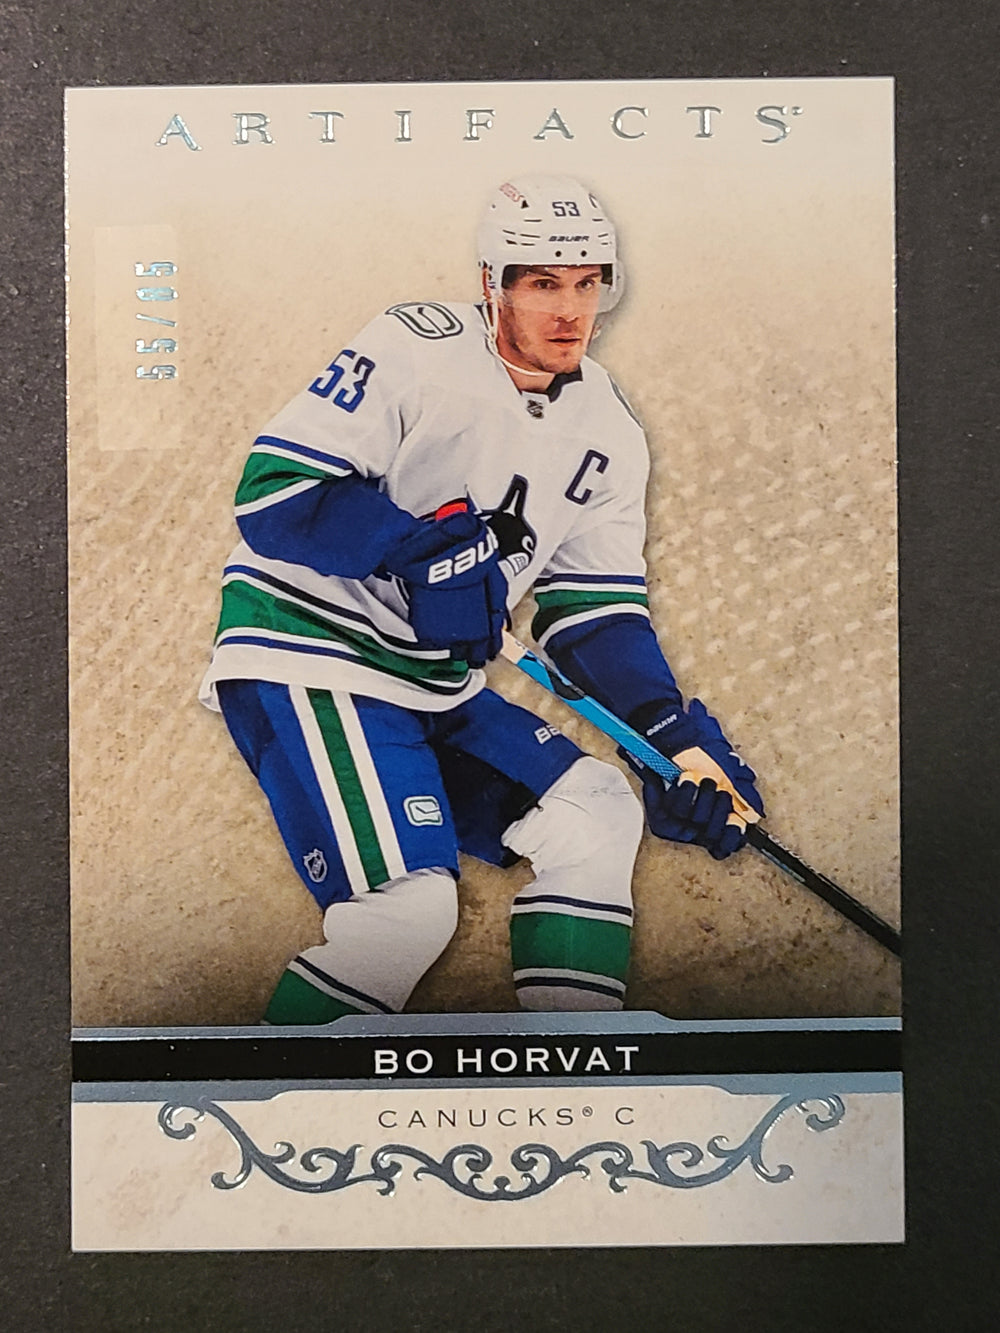 2021-22 Artifacts Light Blue Steel Parallel #1 Bo Horvat Vancouver Canucks 55/85